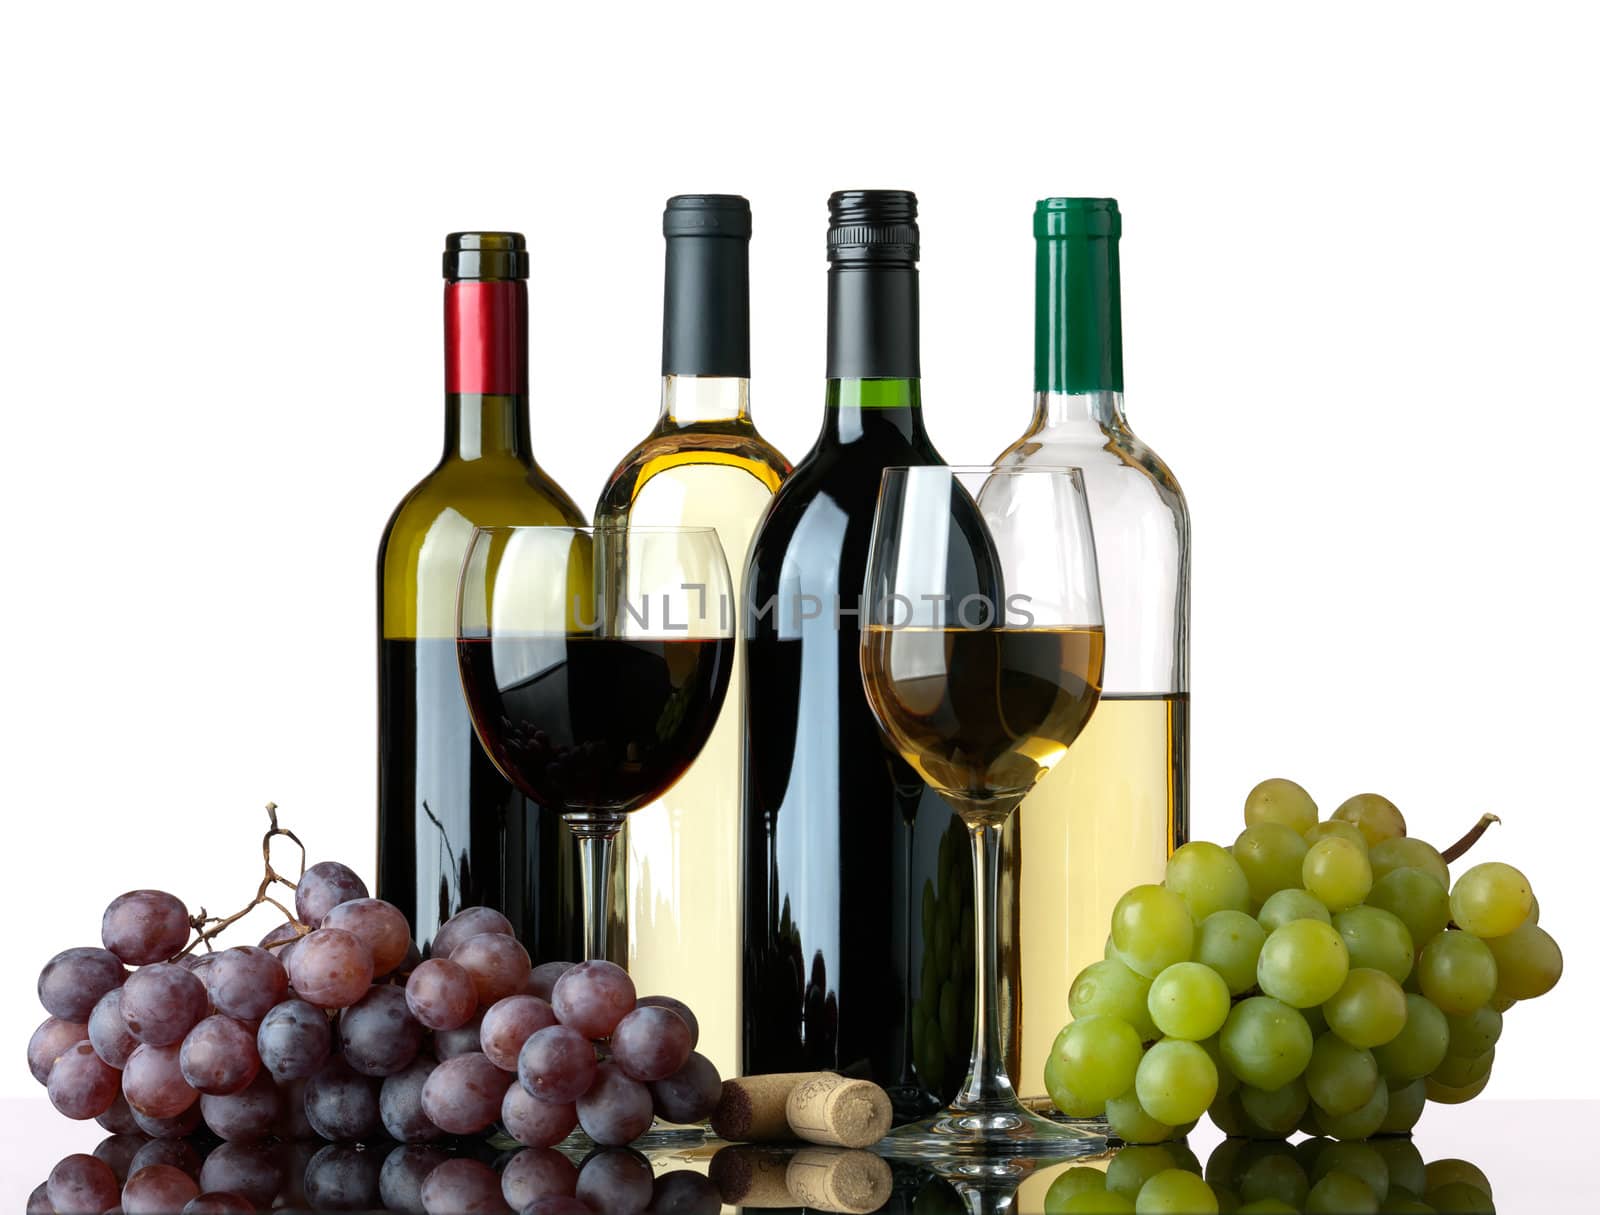 Bottles, glasses and grapes by Antartis